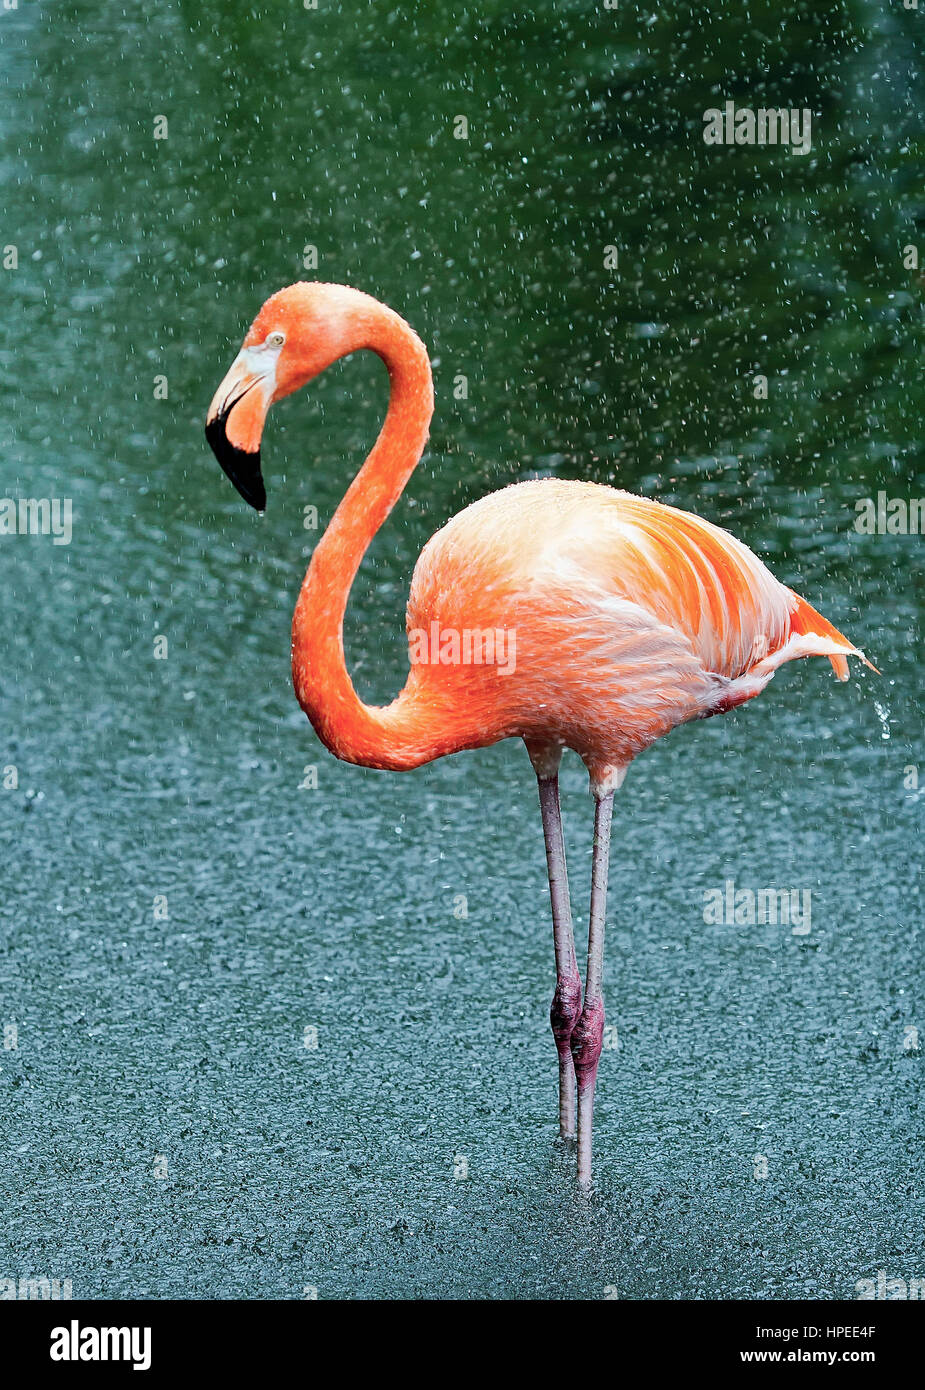 A single pink flamingo in the rain Stock Photo - Alamy